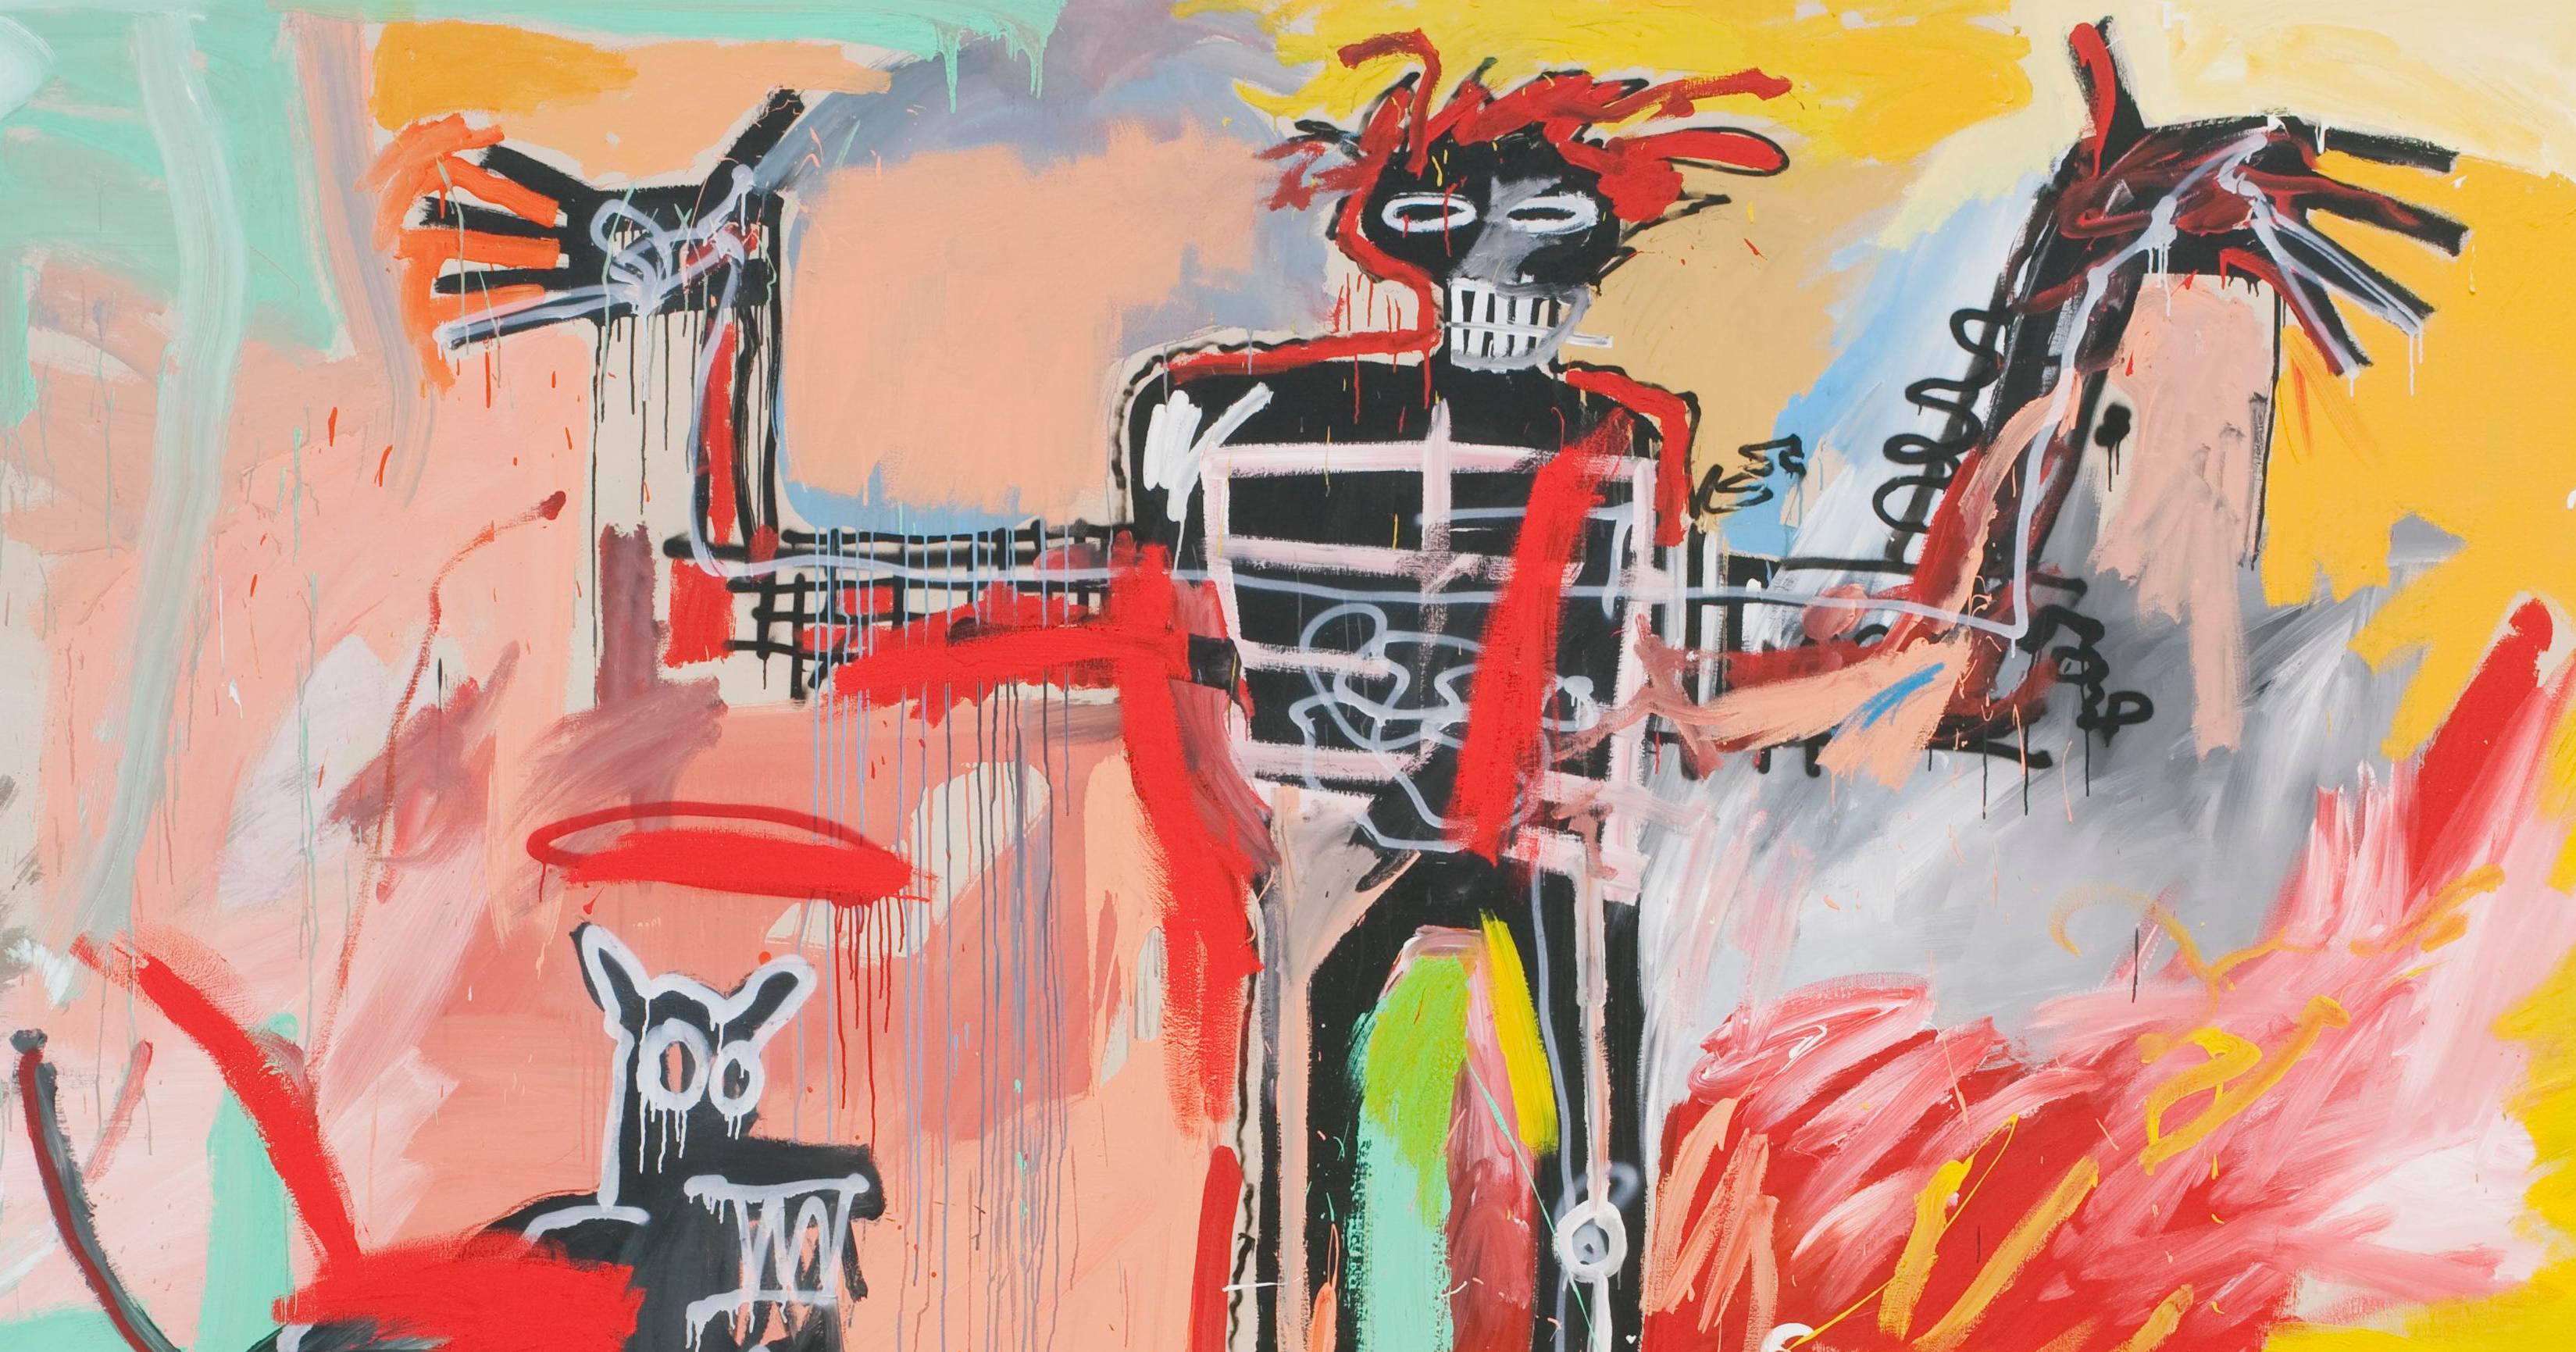 BasquiatBoyz